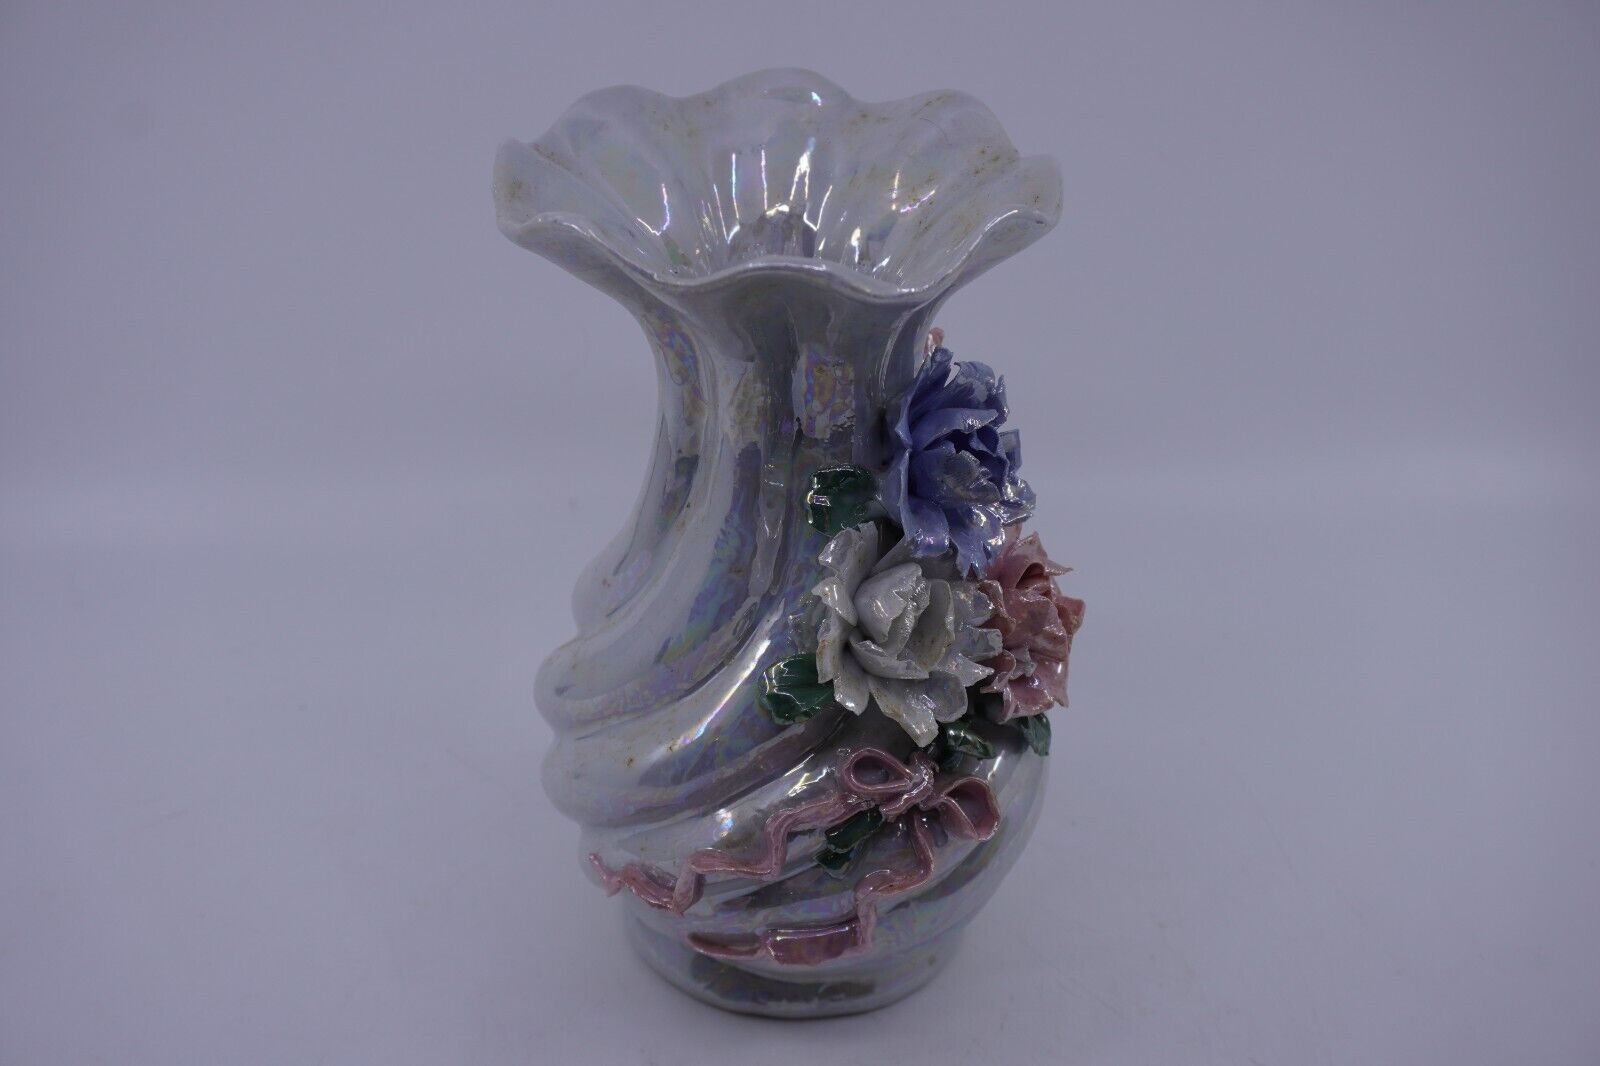 Vintage Noritake Iridescent Glaze Ceramic Vase  Aprox. 7” tall.  🌺